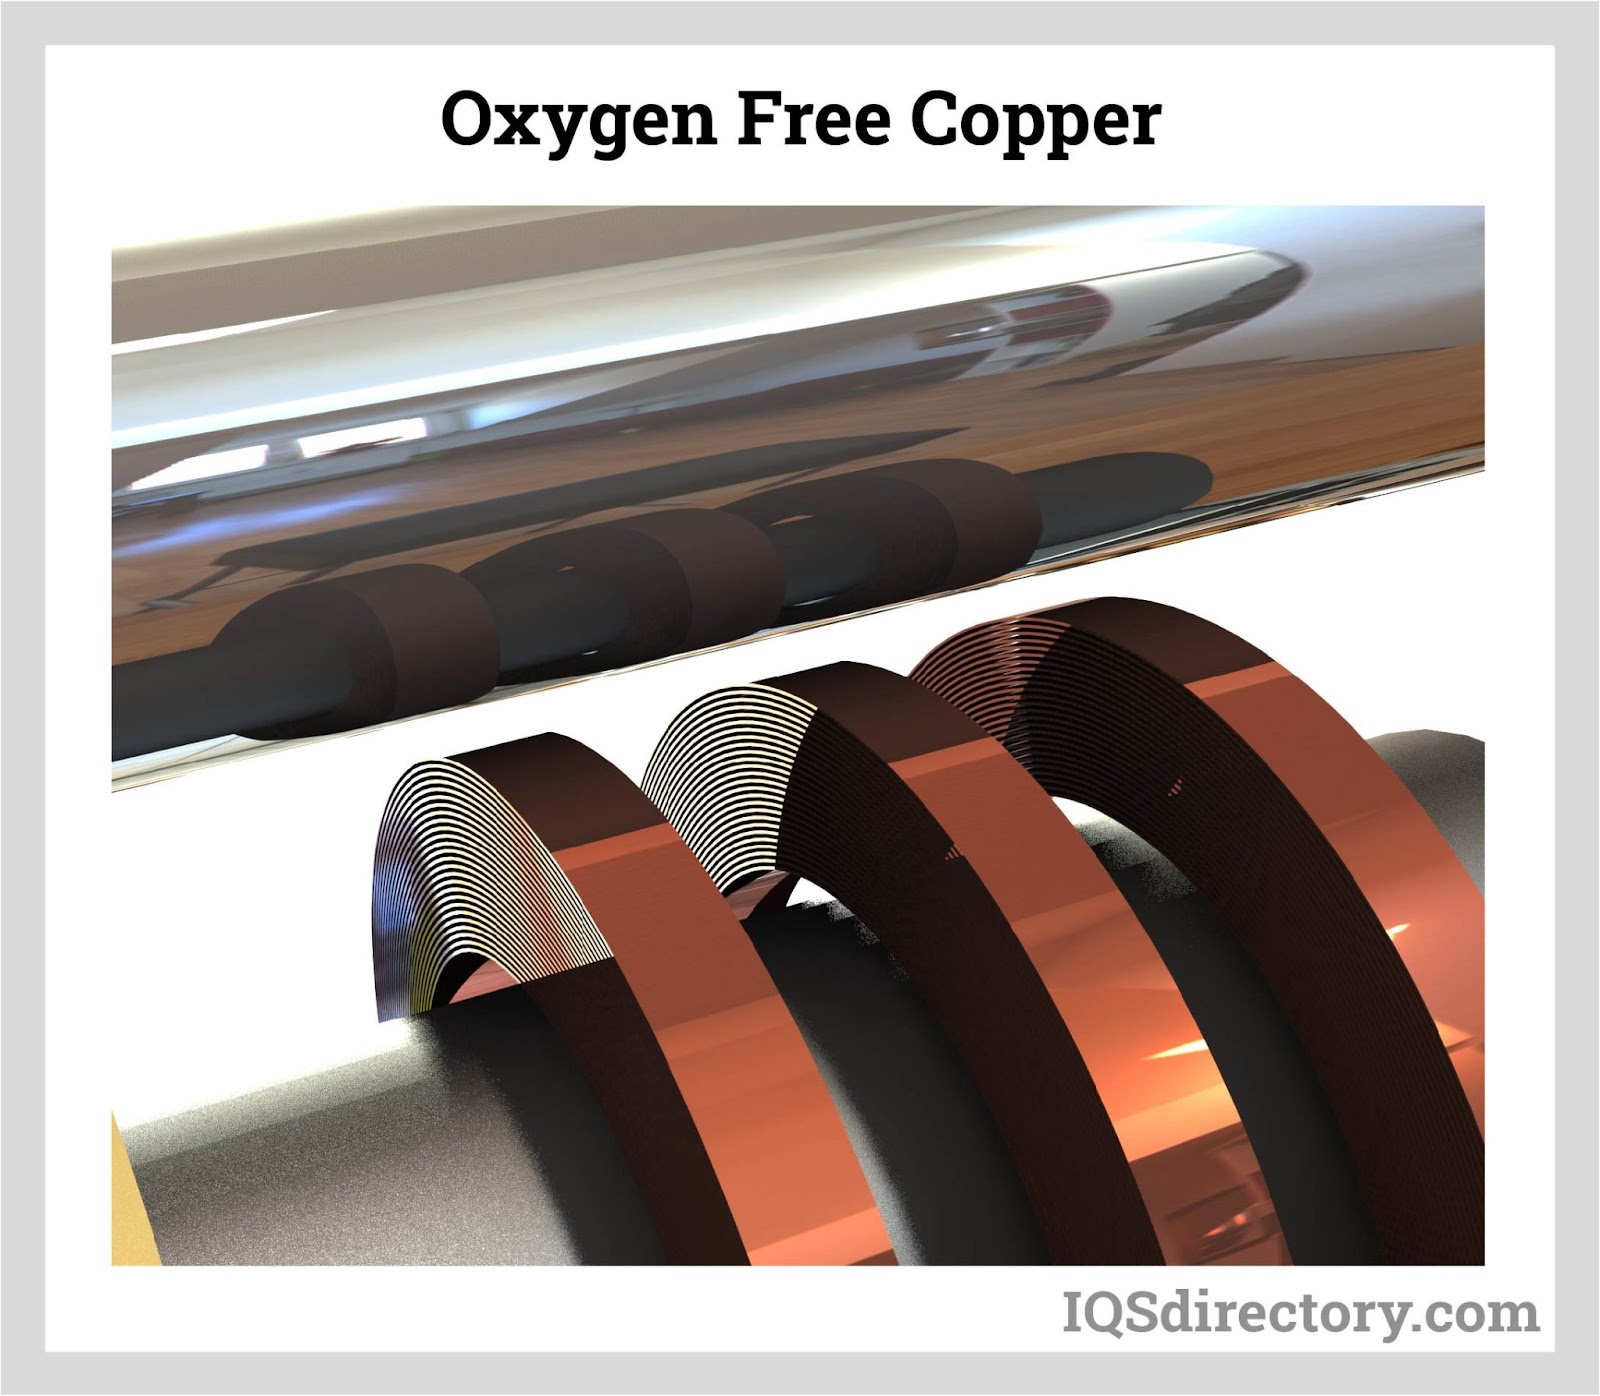 Oxygen-Free Copper